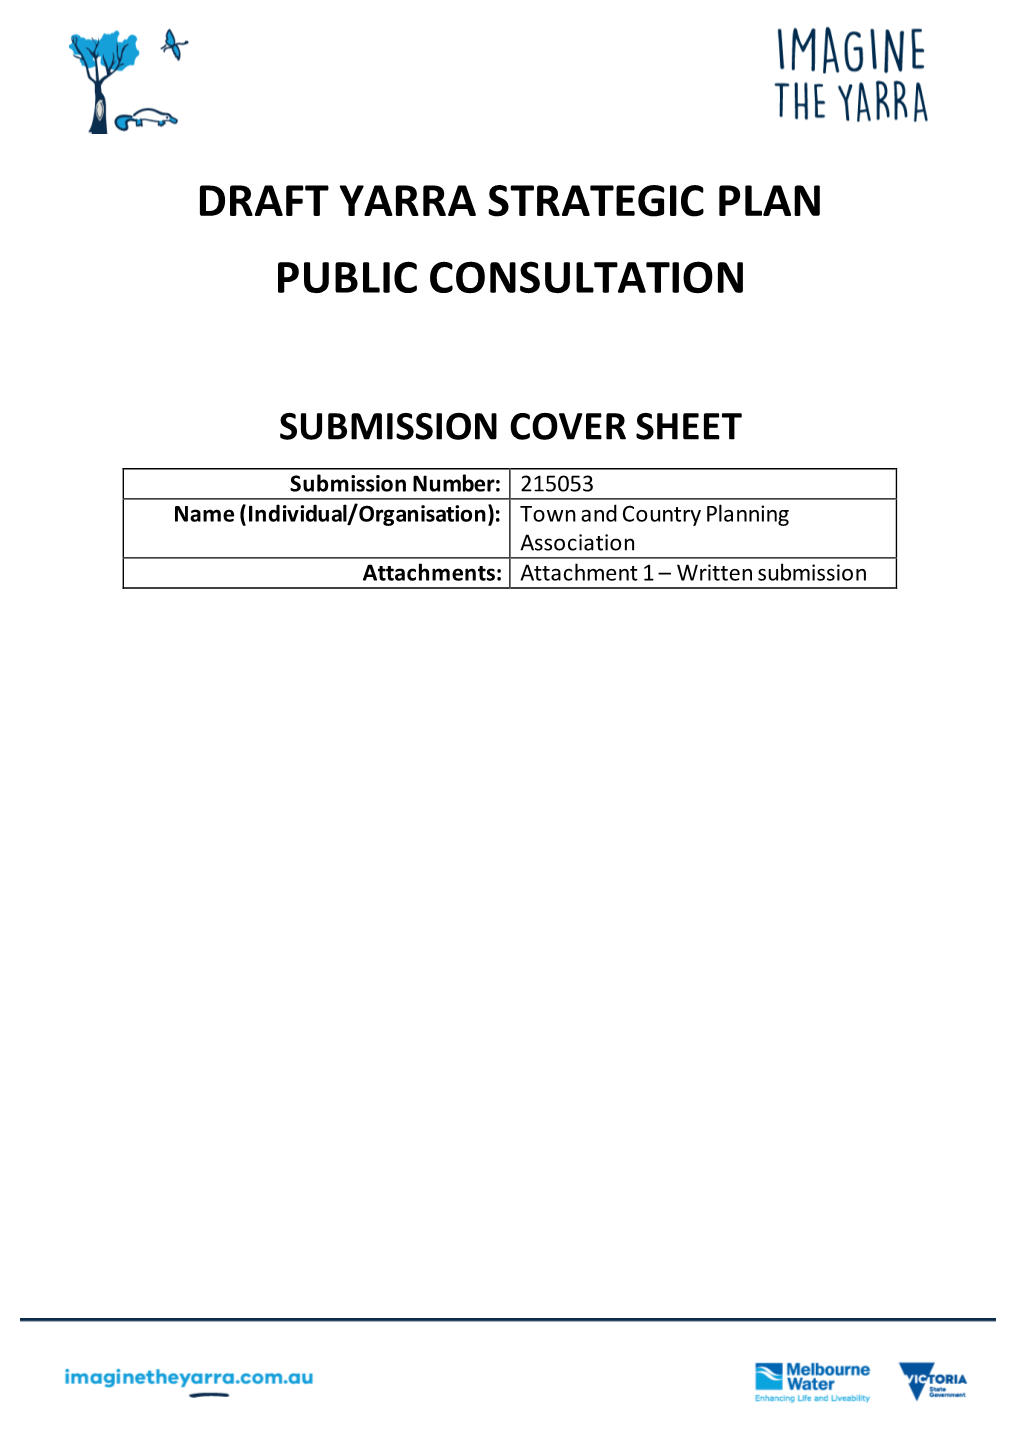 Draft Yarra Strategic Plan Public Consultation